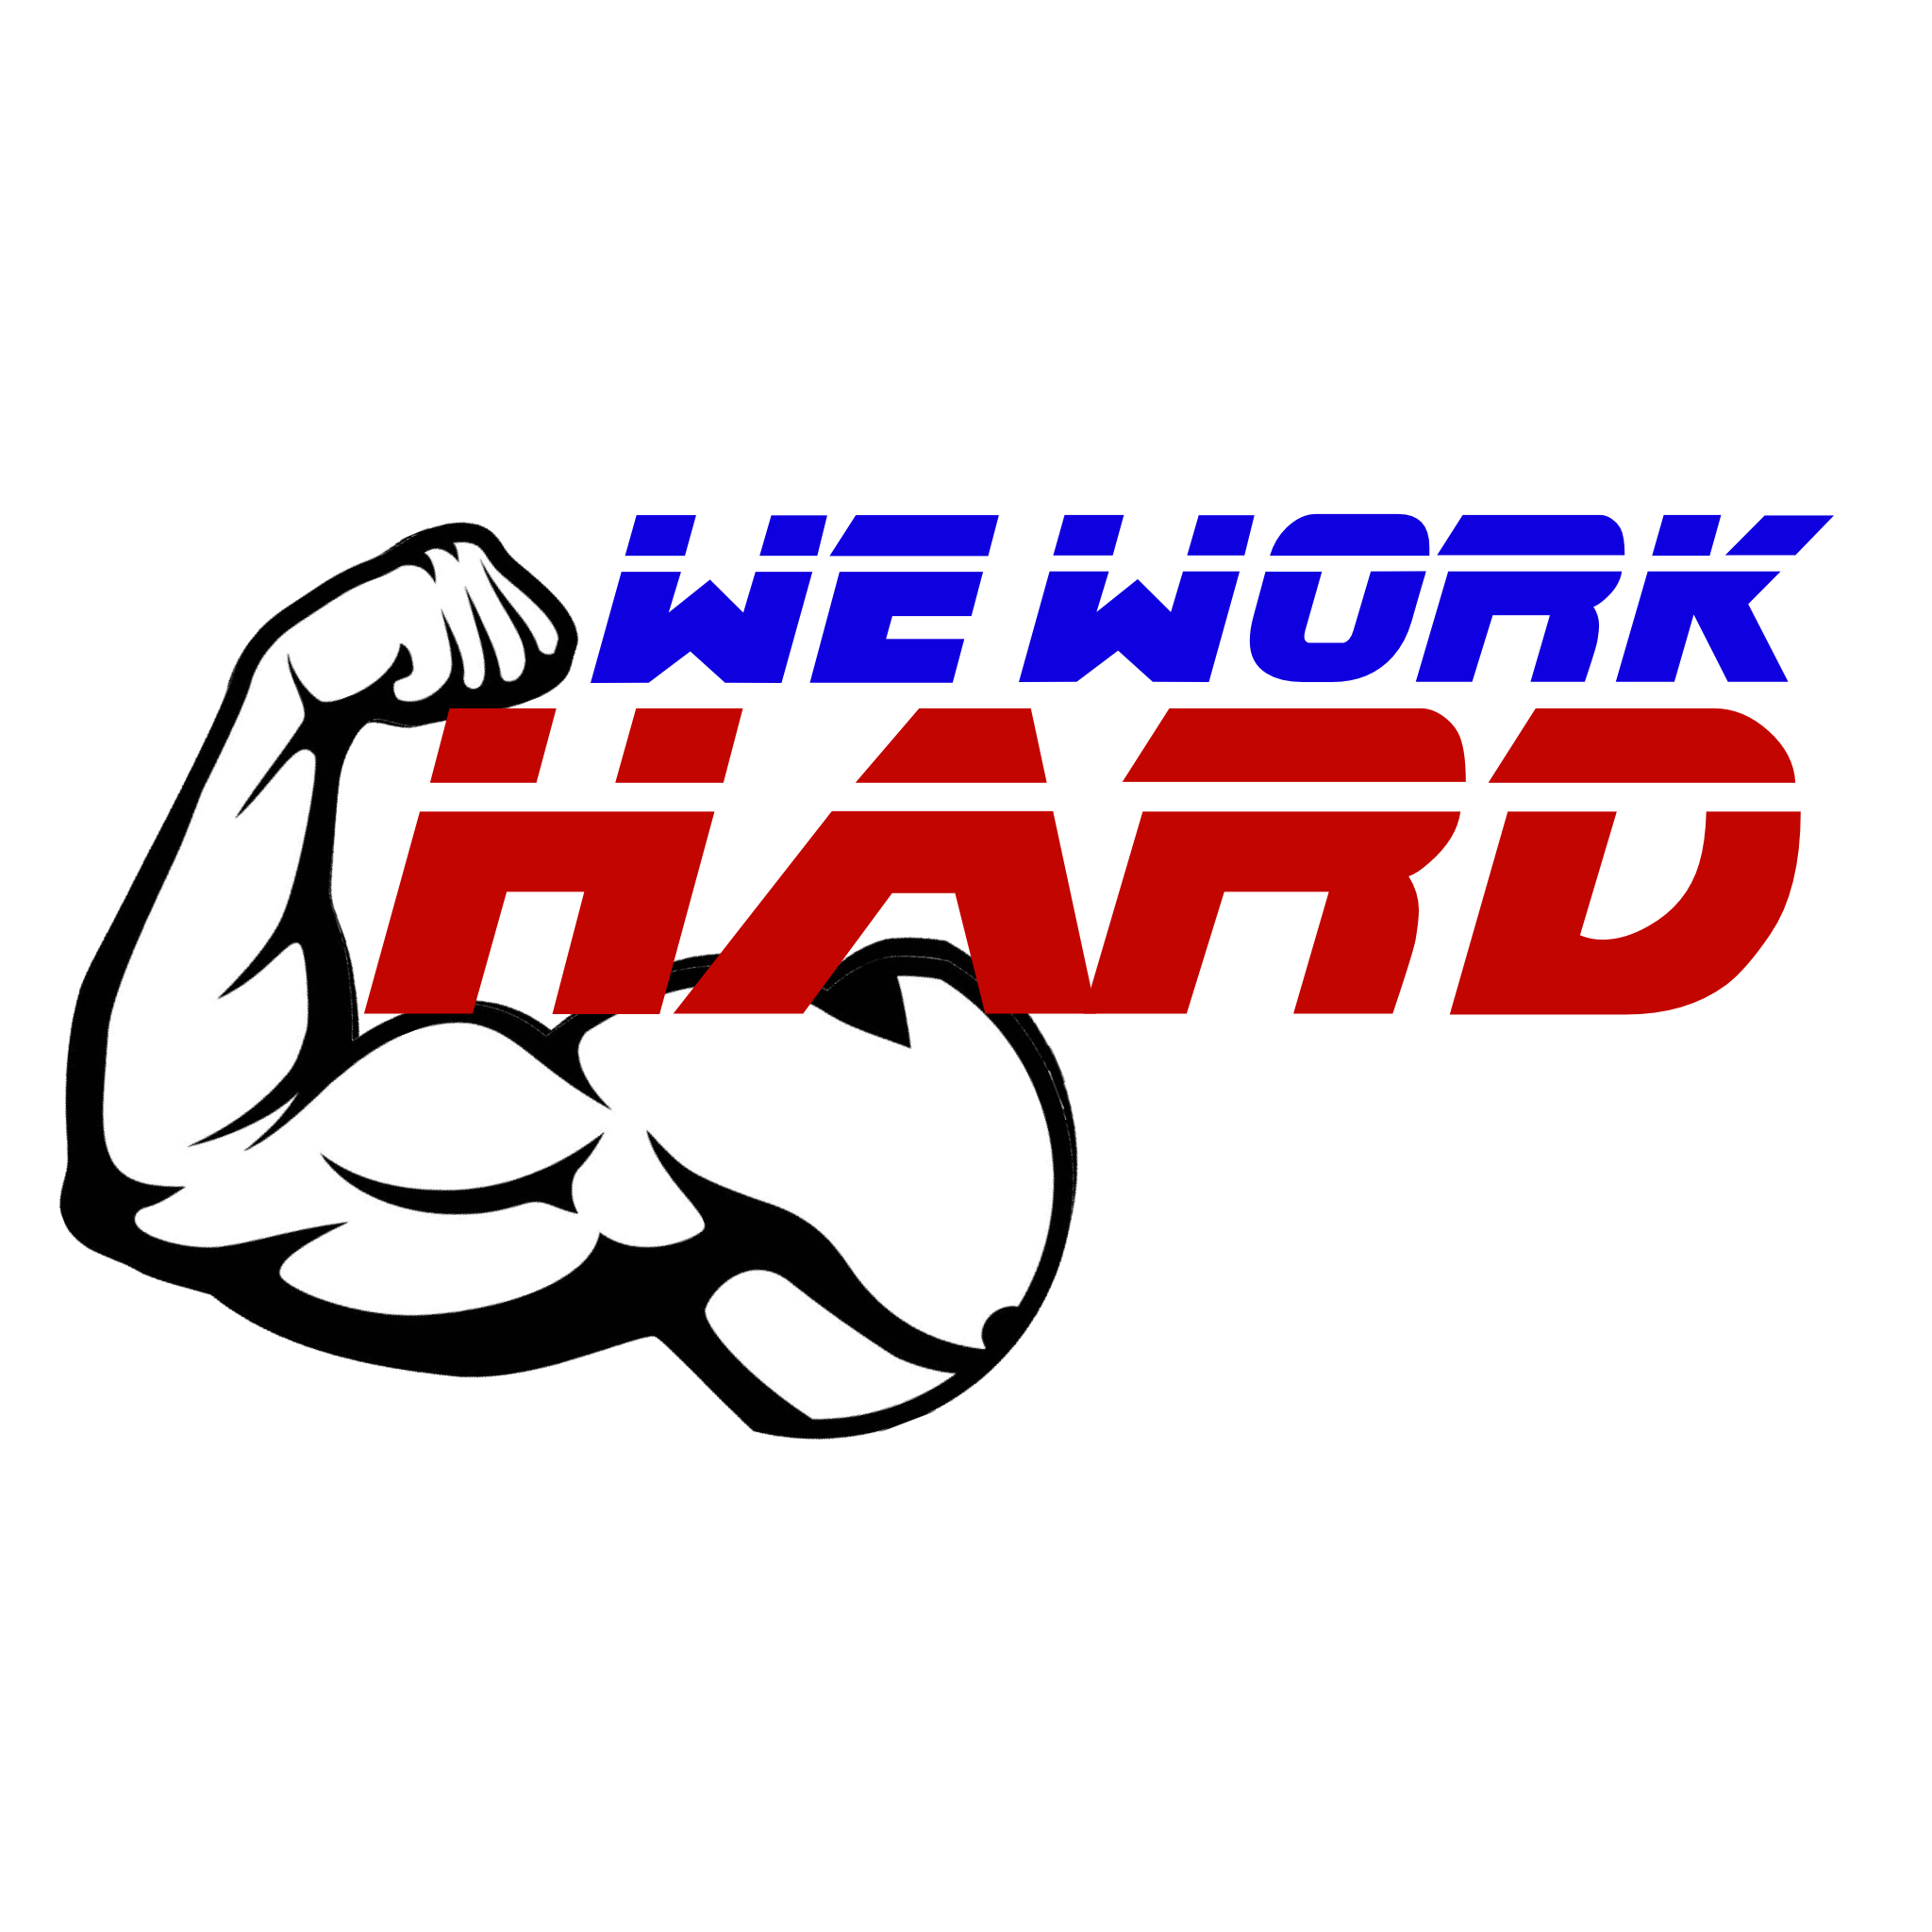 hard worker logo